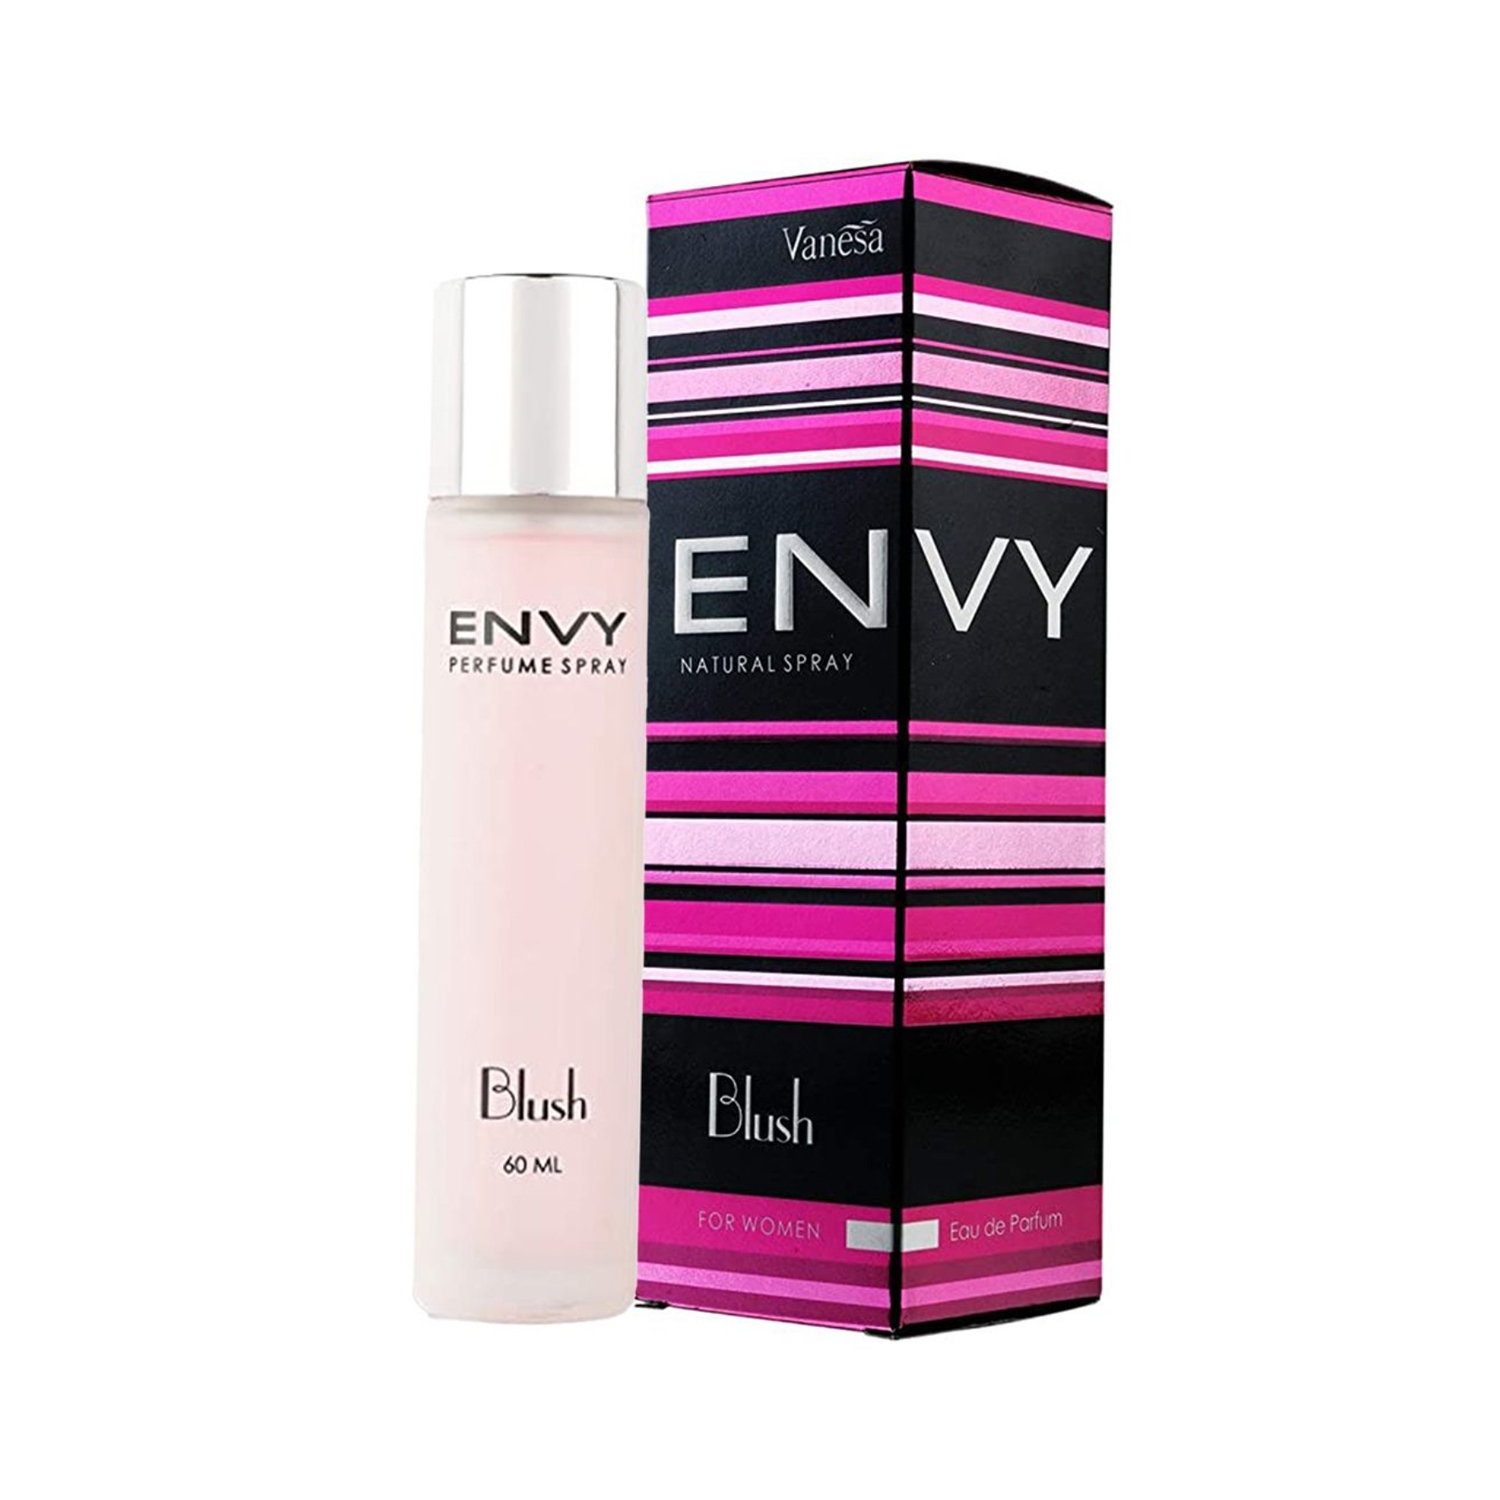 Envy Blush Perfume (60ml)